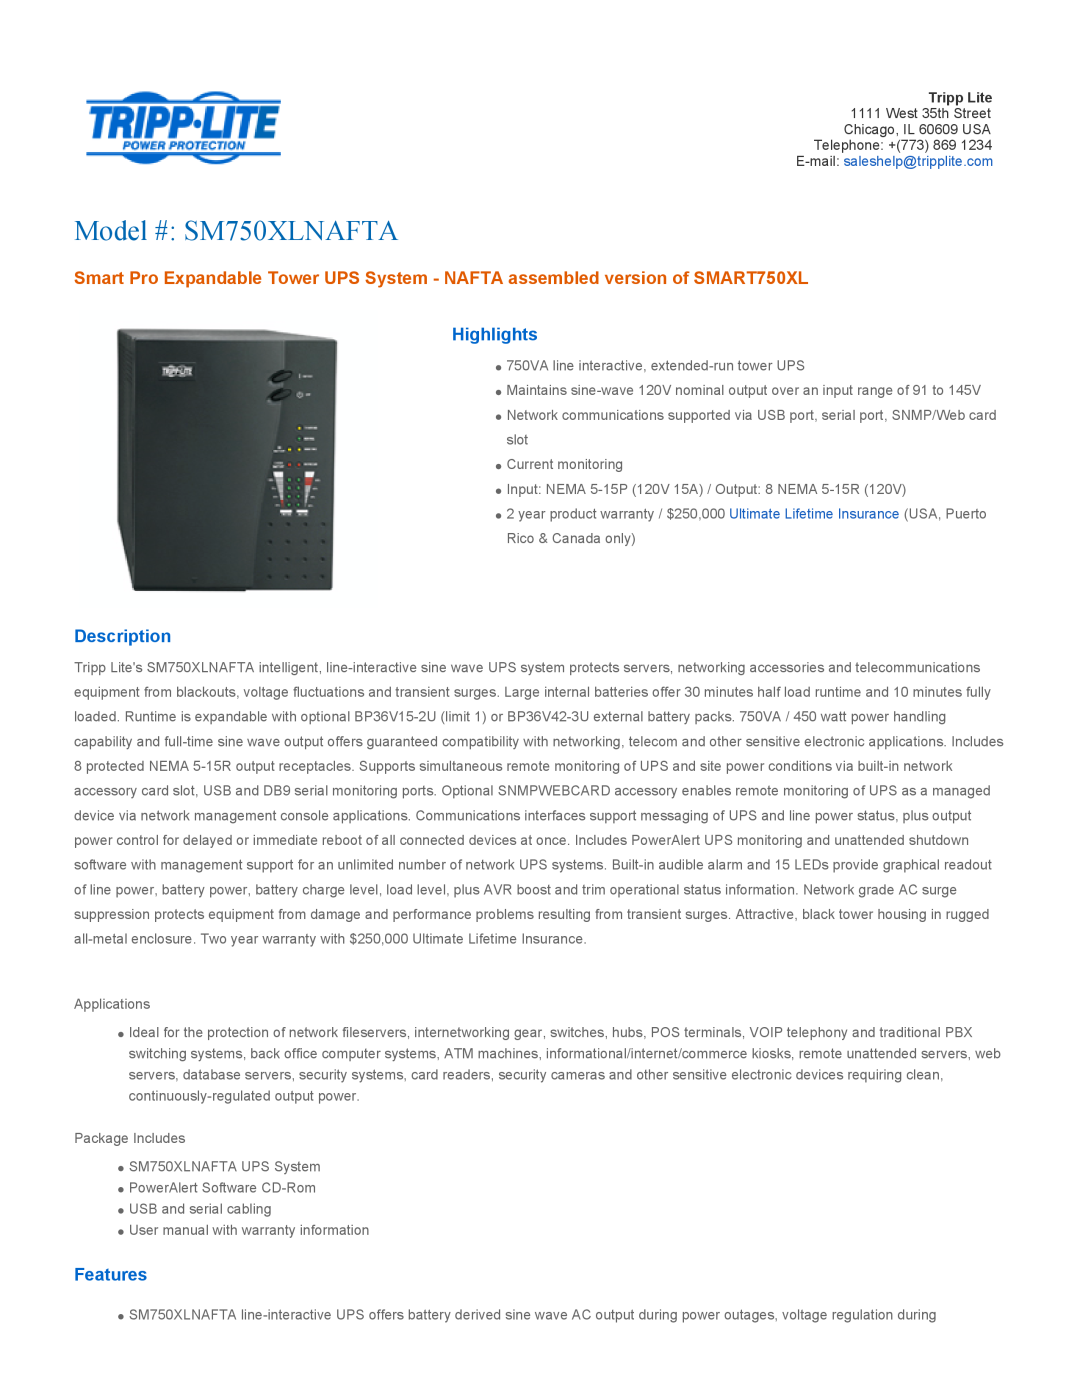 Tripp Lite warranty Highlights, Description, Features, Model # SM750XLNAFTA 